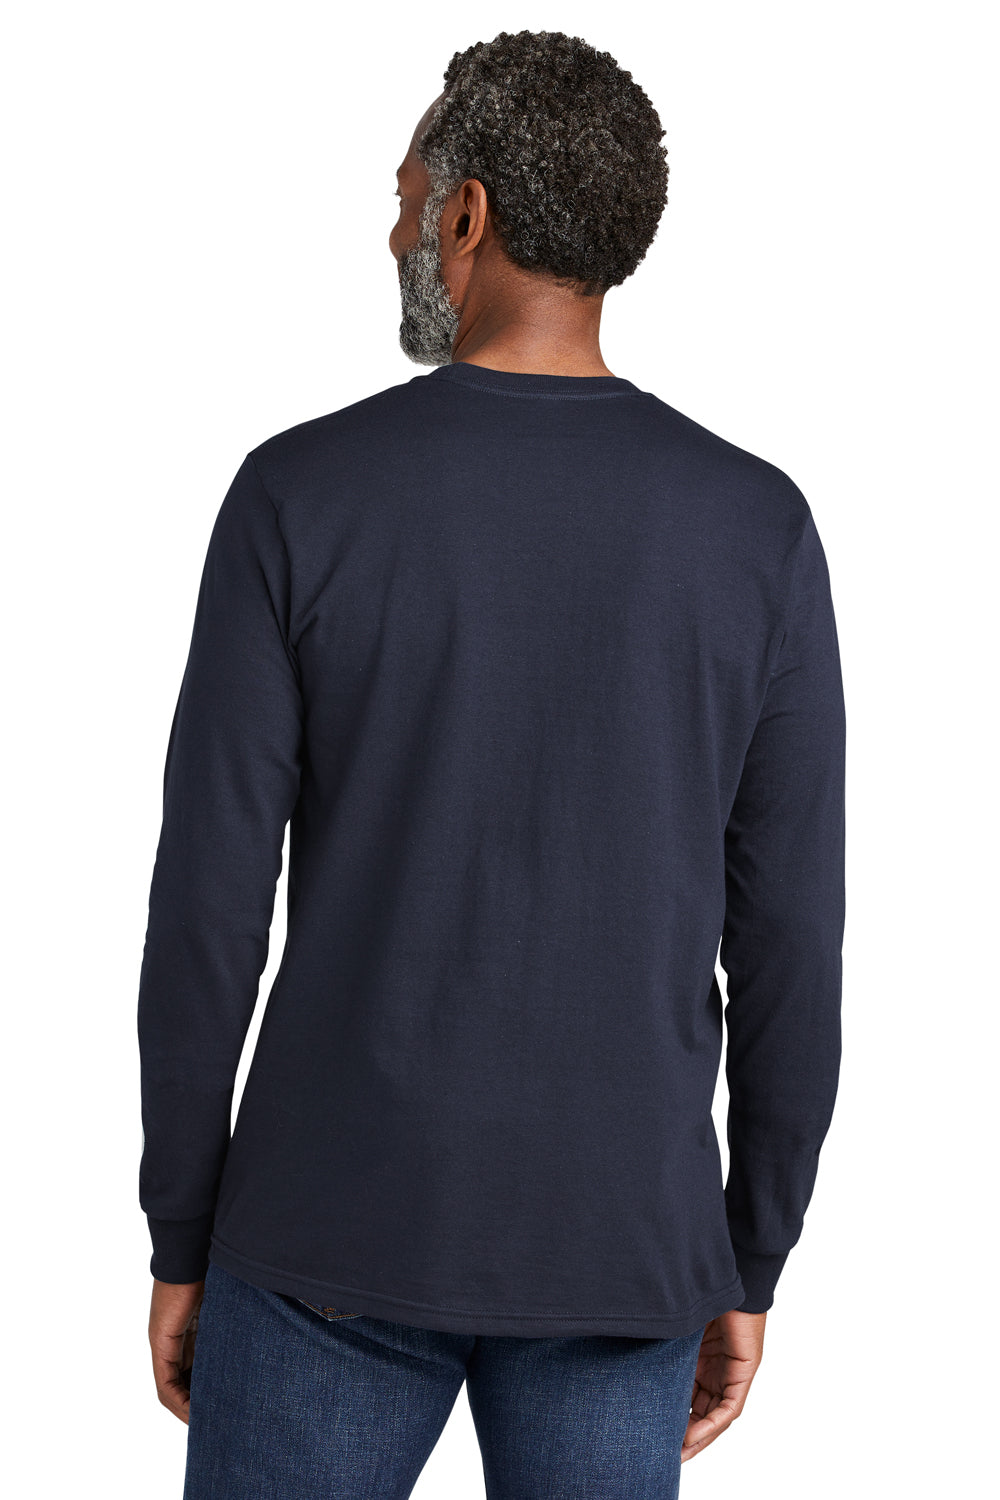 Volunteer Knitwear VL100LS USA Made All American Long Sleeve Crewneck T-Shirts Strong Navy Blue Back